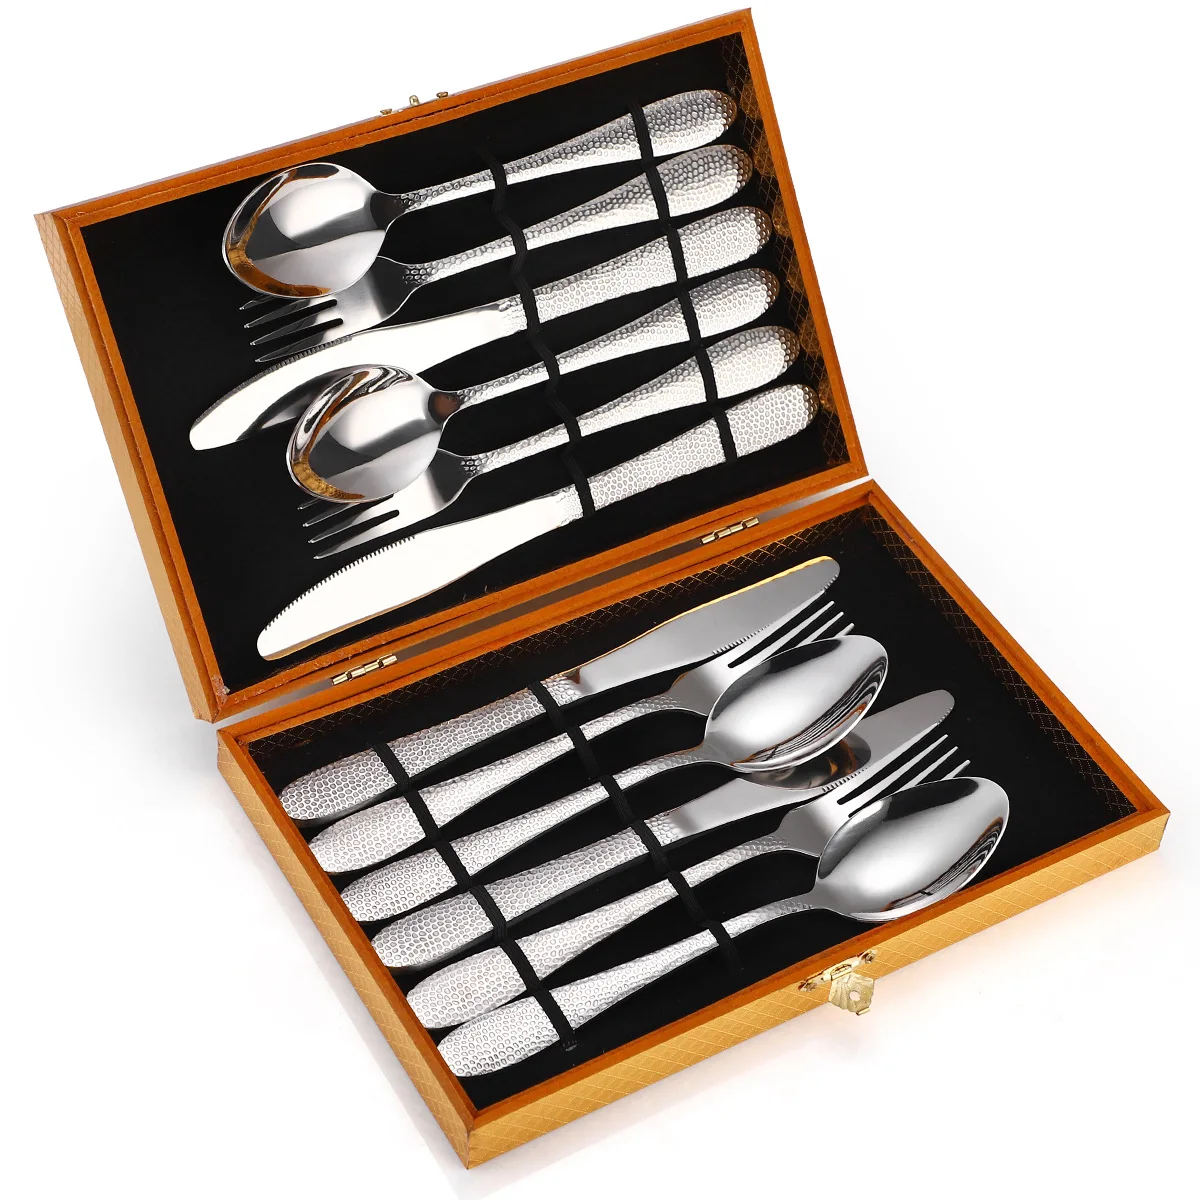 

XITUO 12Pcs High-Grade Stainless Steel Tableware Set Aristocratic Luxury Knife Fork Spoon Set Golden Wooden Box Wedding Best Gif